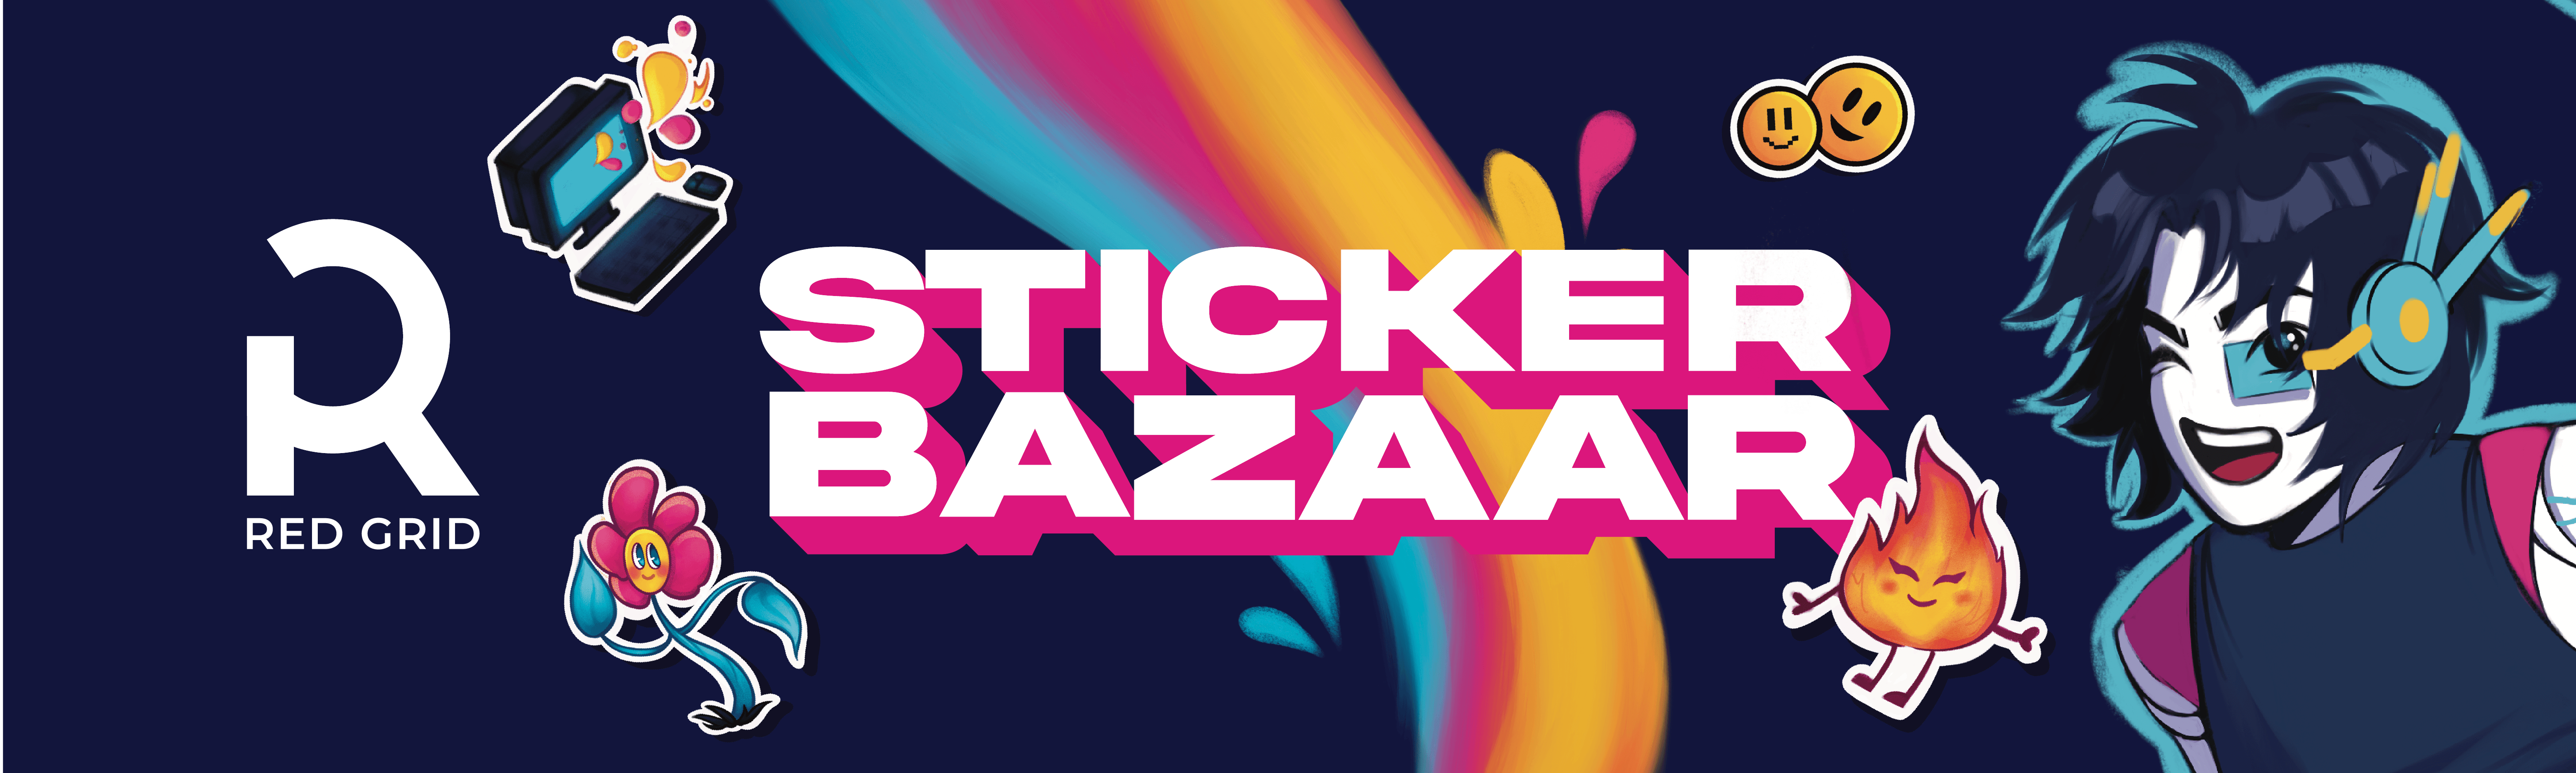 banner-Sticker-Bazaar.png